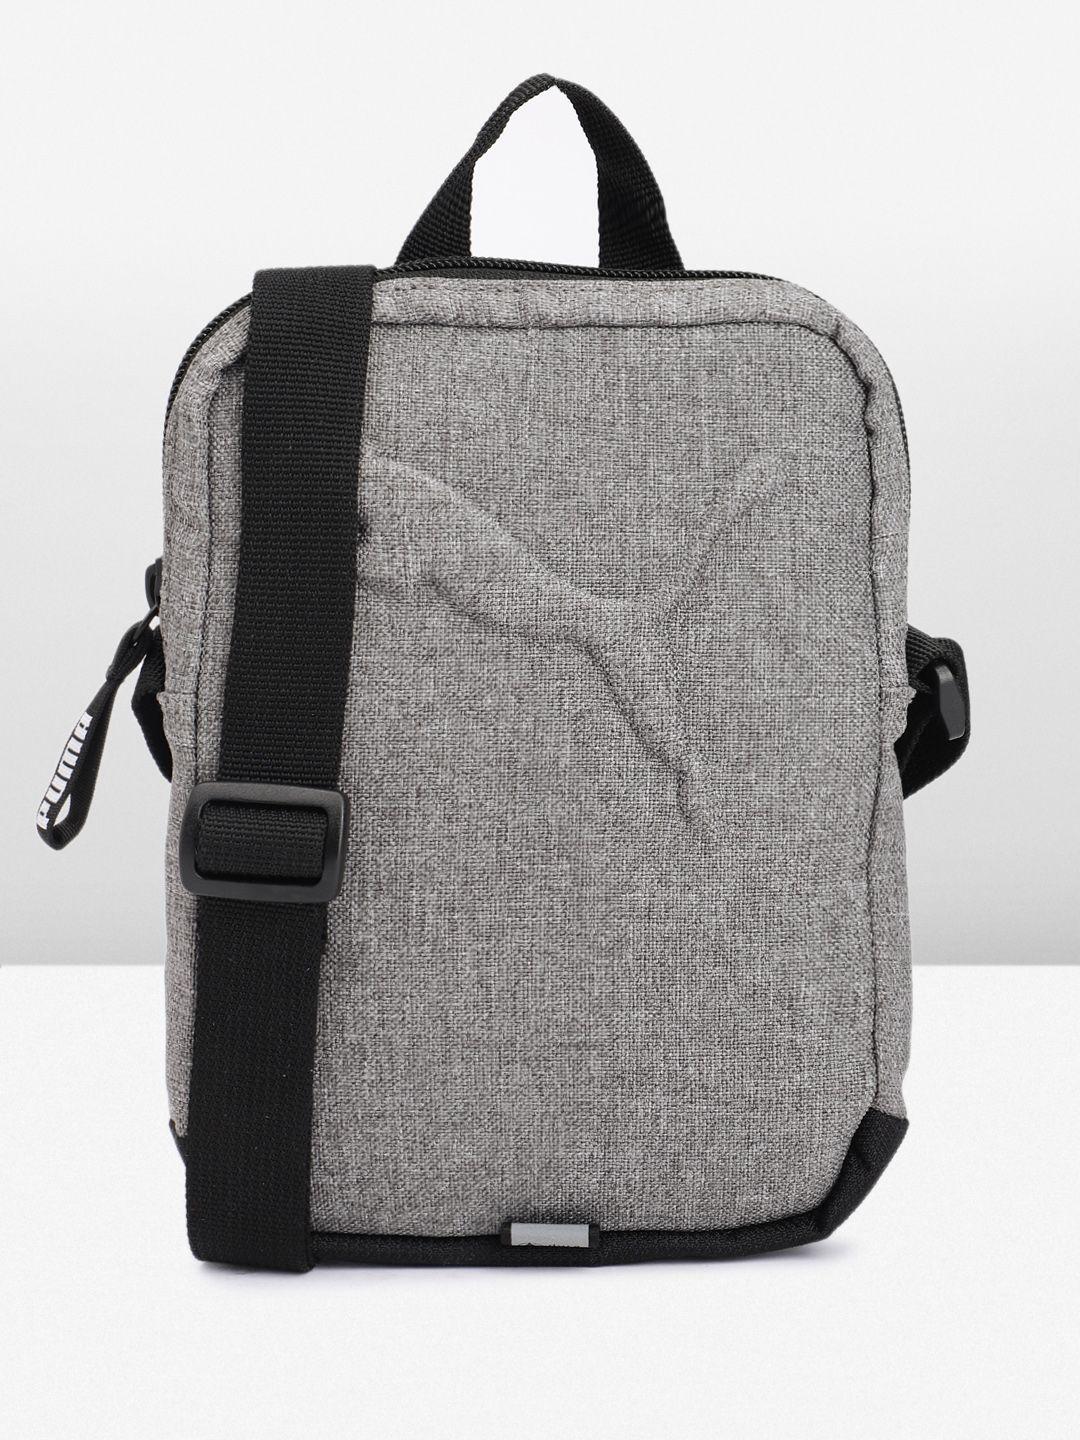 puma unisex structured messenger bag